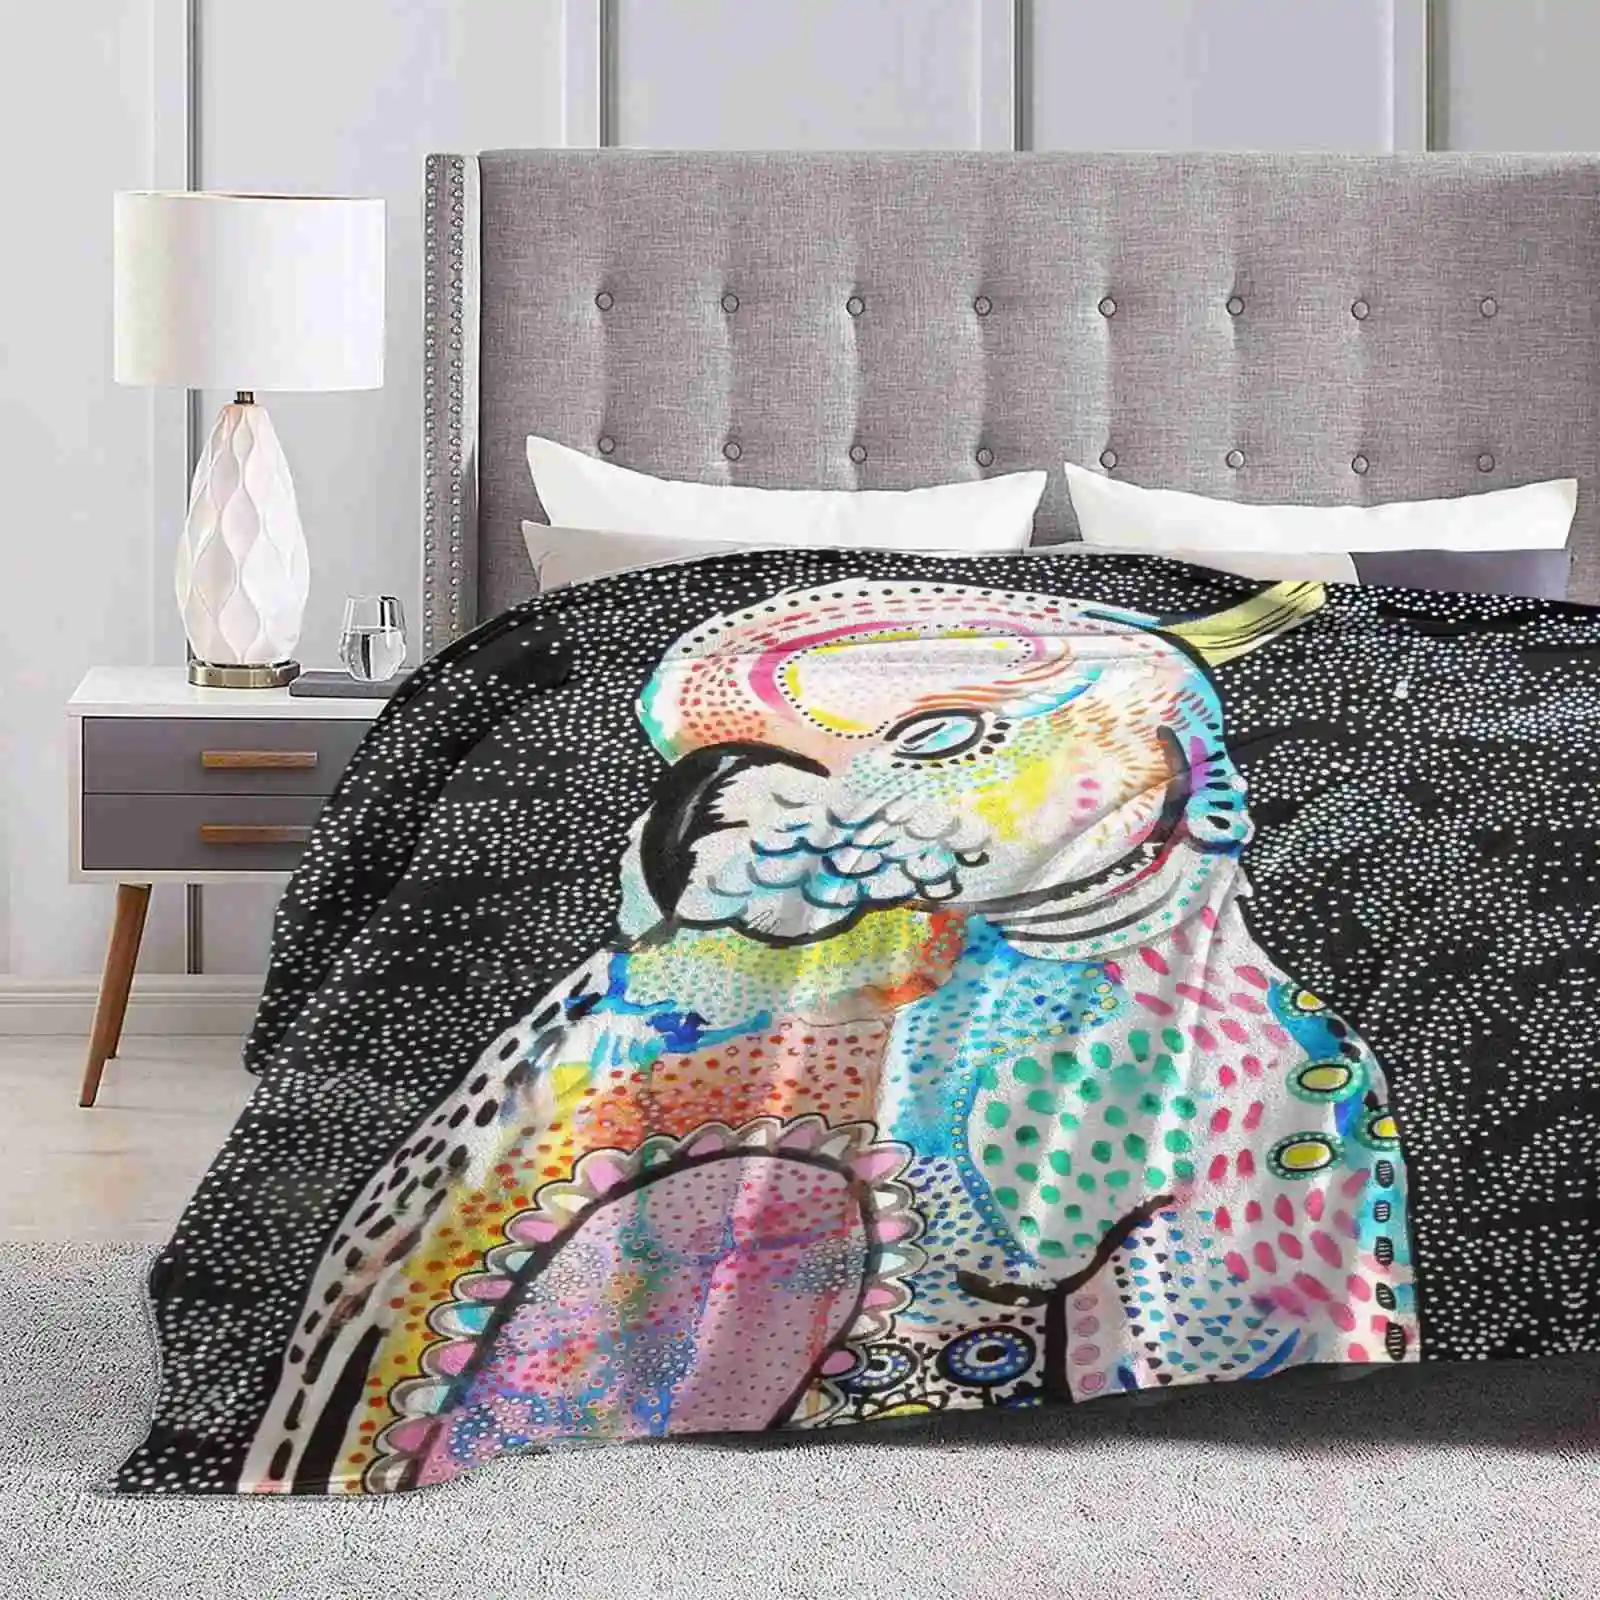 

Декоративное удобное теплое фланелевое одеяло Какаду креативного дизайна